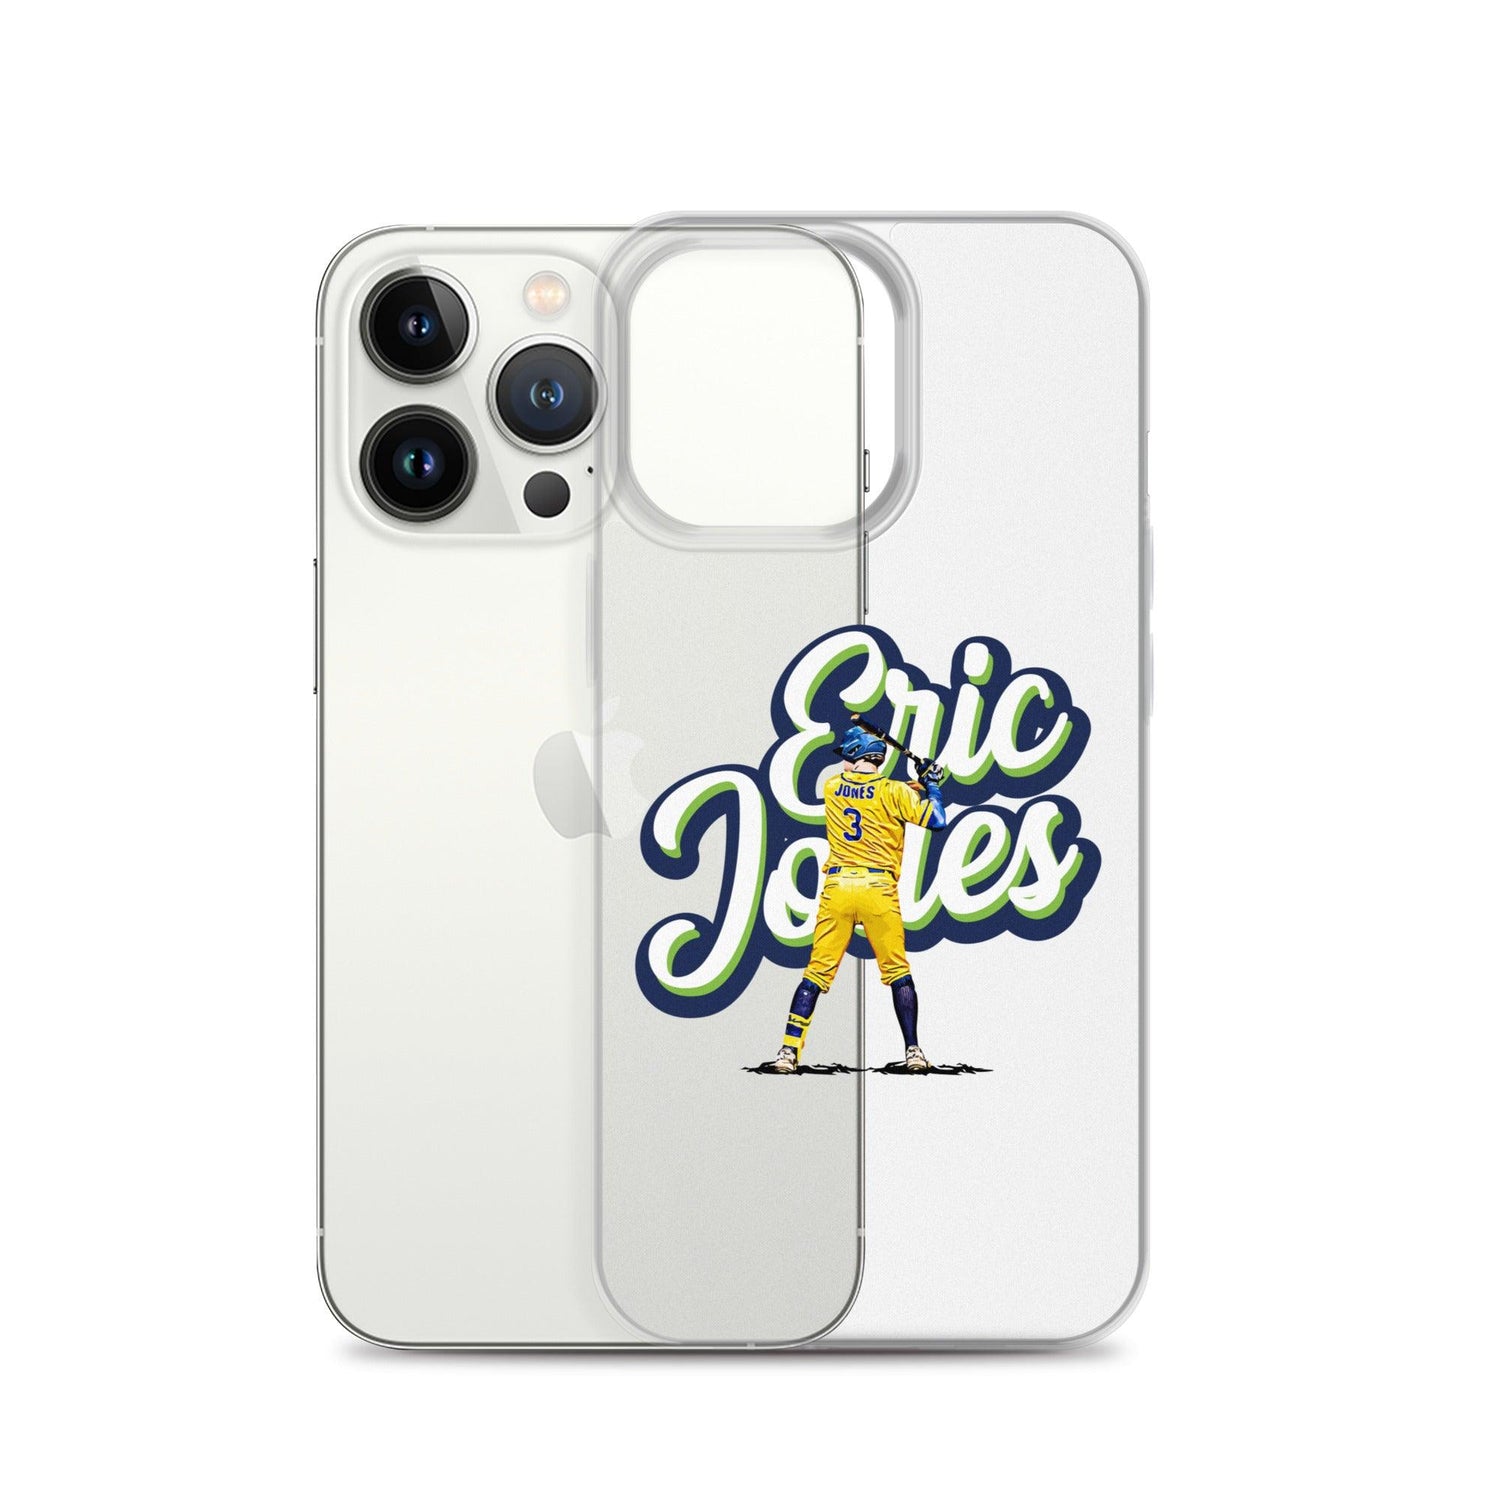 Eric Jones  "Gameday" iPhone® - Fan Arch